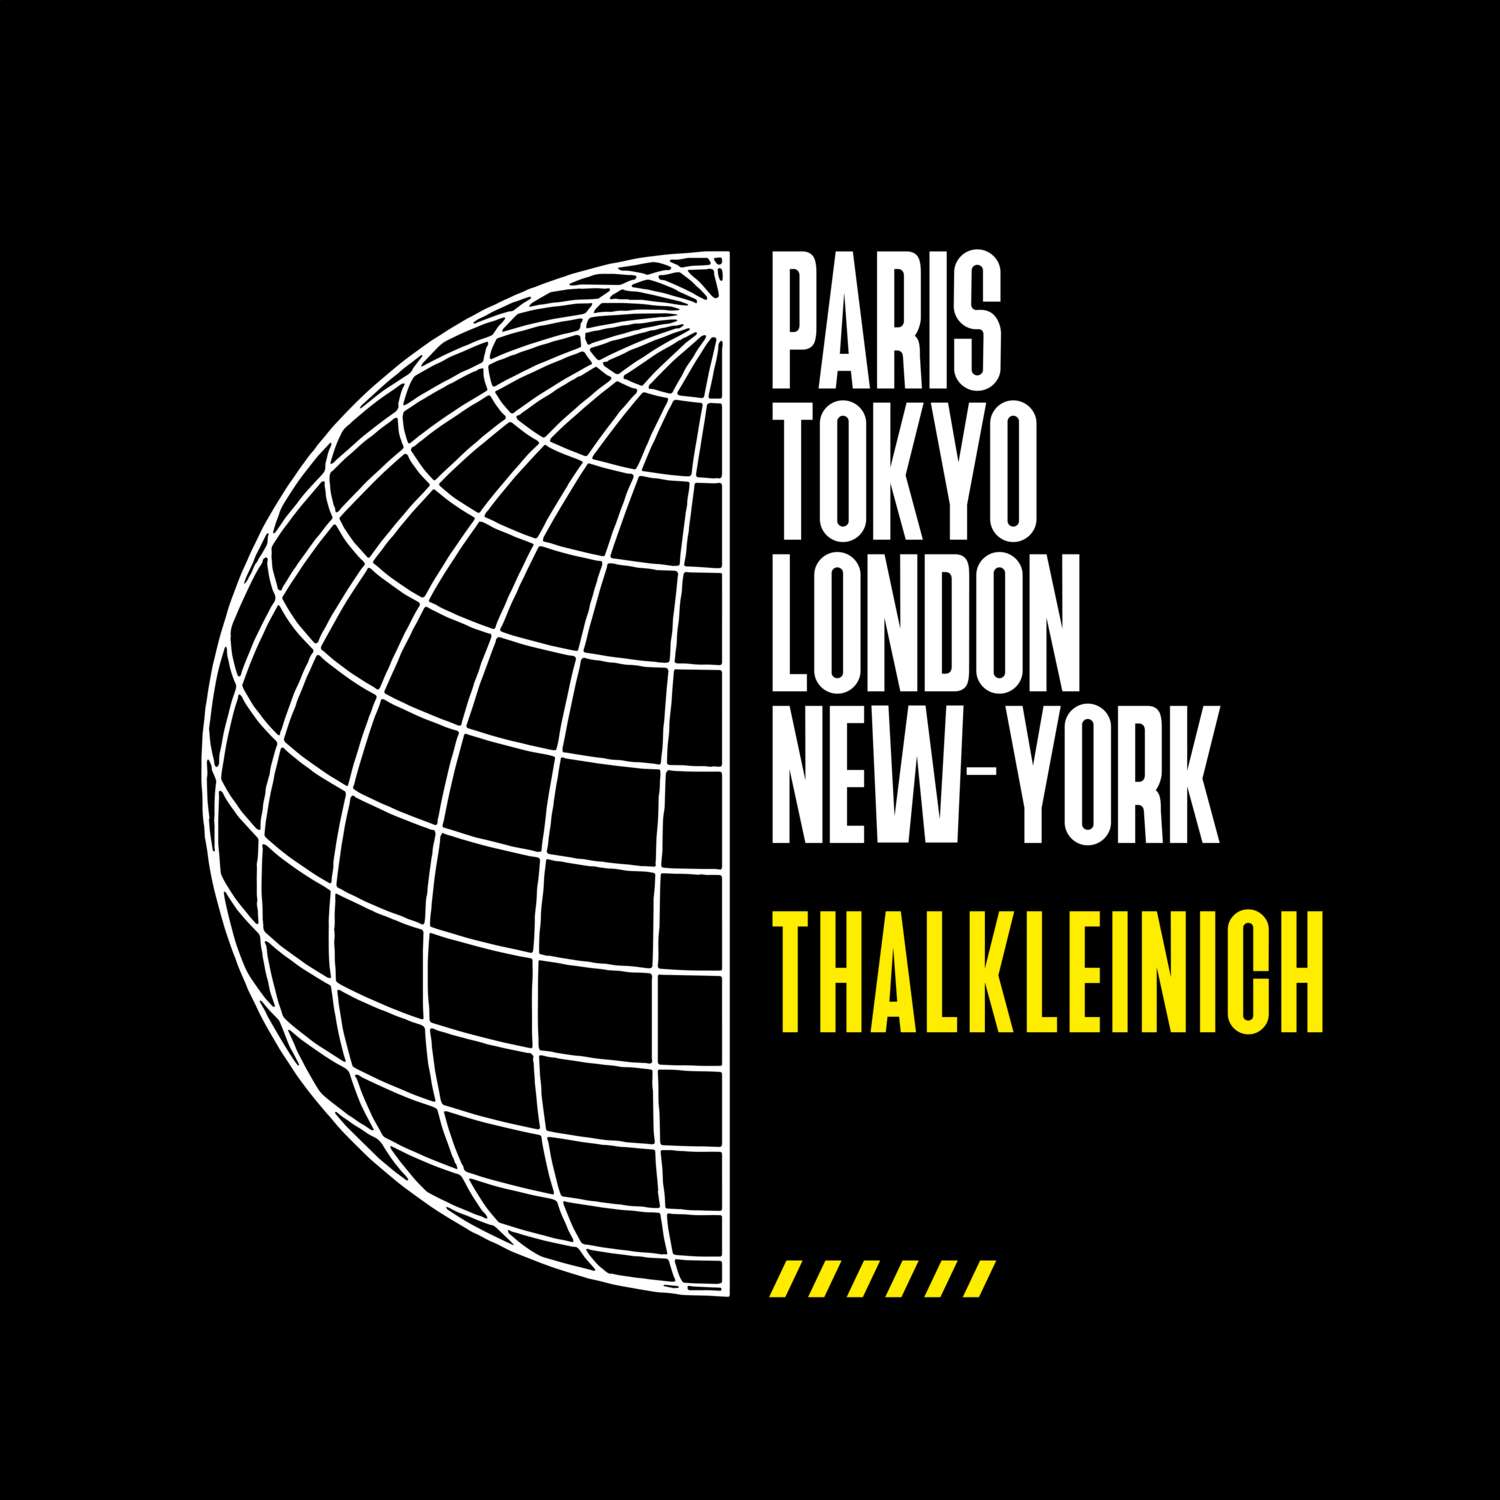 Thalkleinich T-Shirt »Paris Tokyo London«